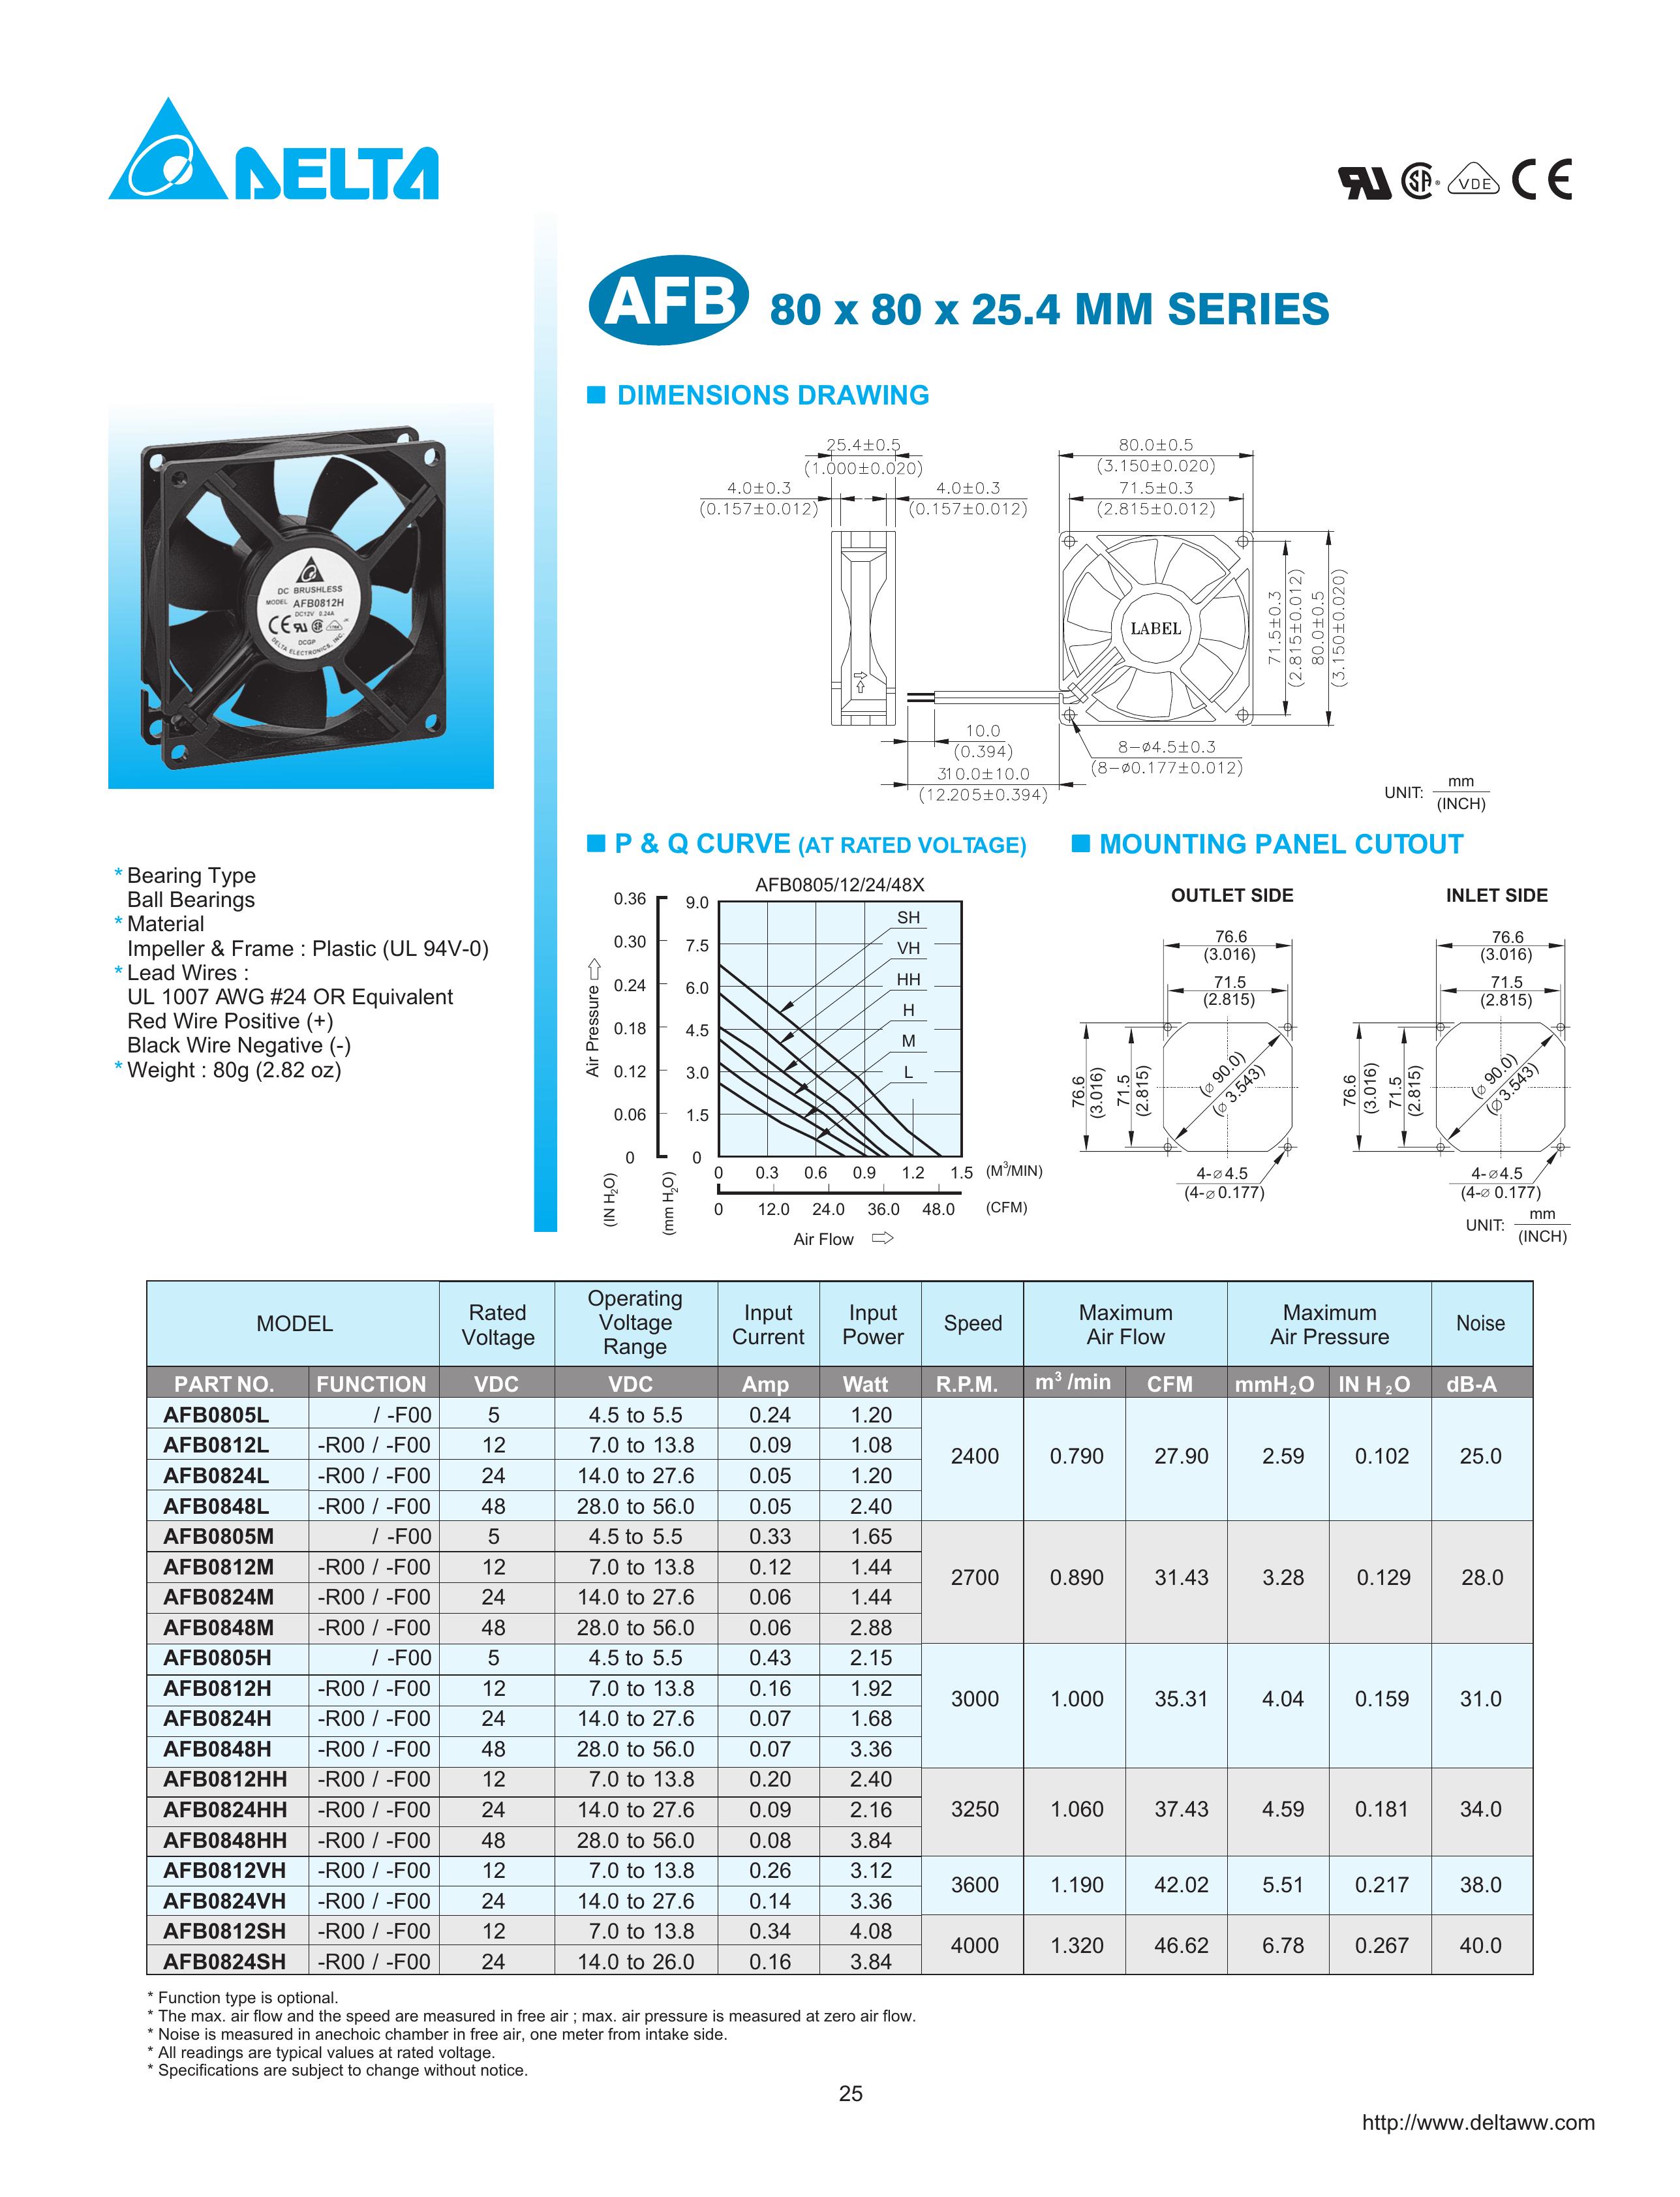 Delta Electronics 80 x 80 x 25.4 MM Series Ventilation Hood User Manual